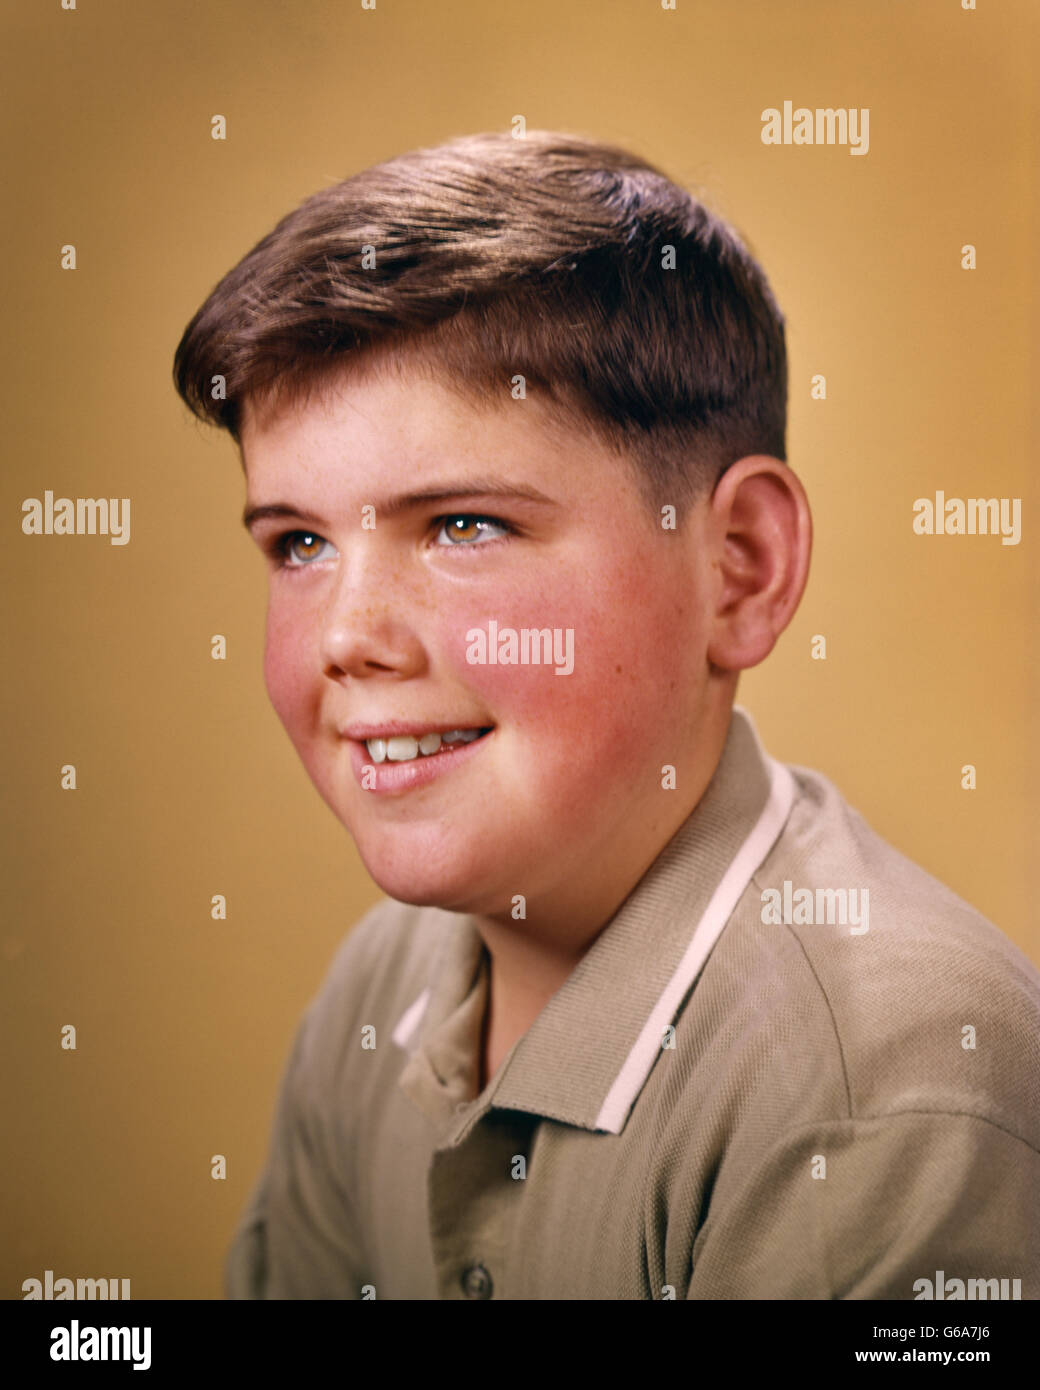 1950s PORTRAIT SMILING PRE-TEEN TEENAGE BOY Stock Photo